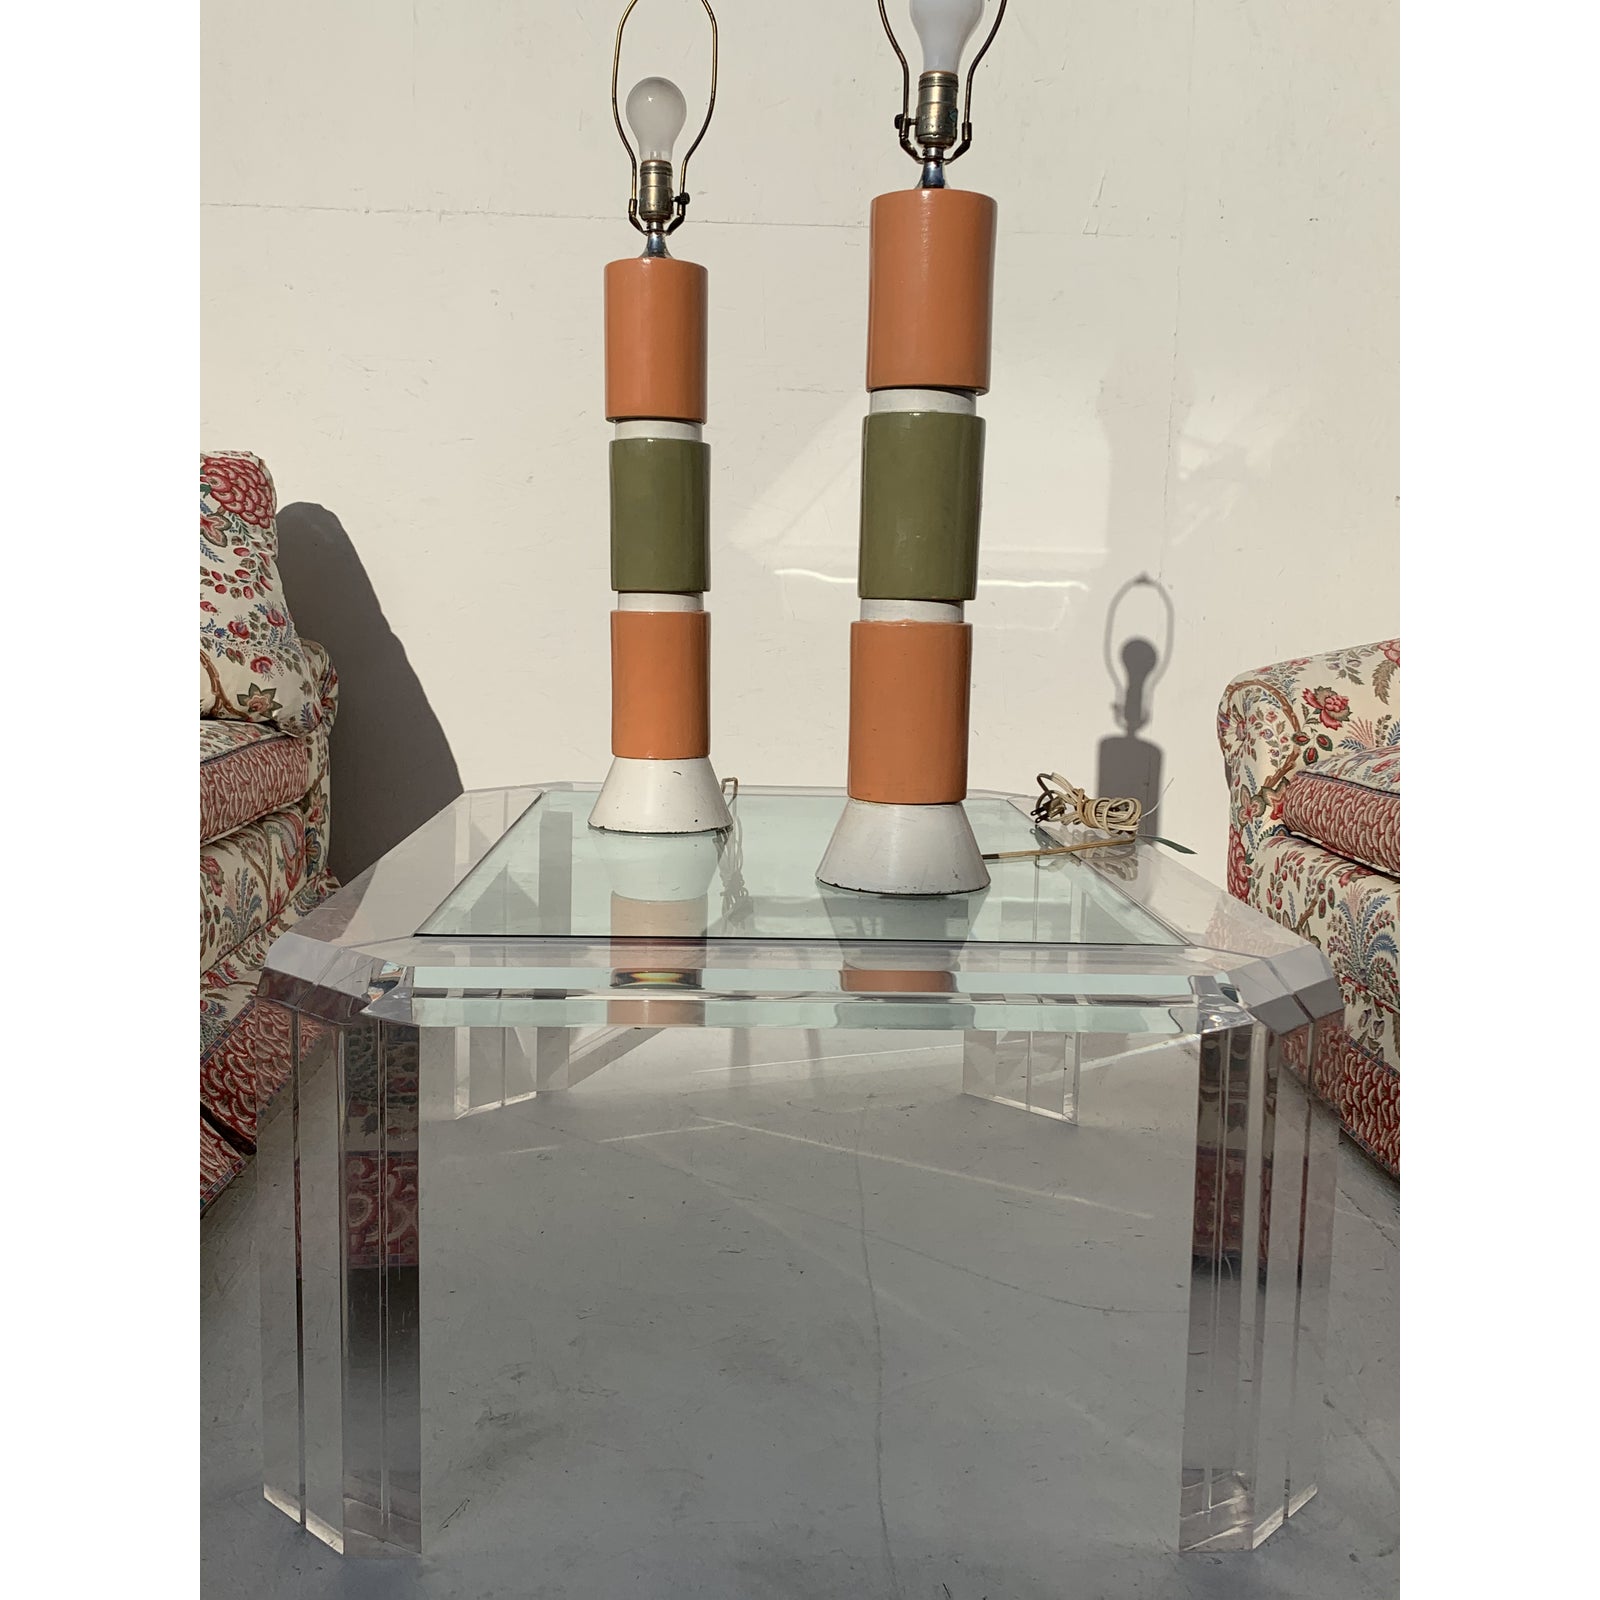 1950s-mid-century-modern-lamps-orange-avocado-a-pair-7070